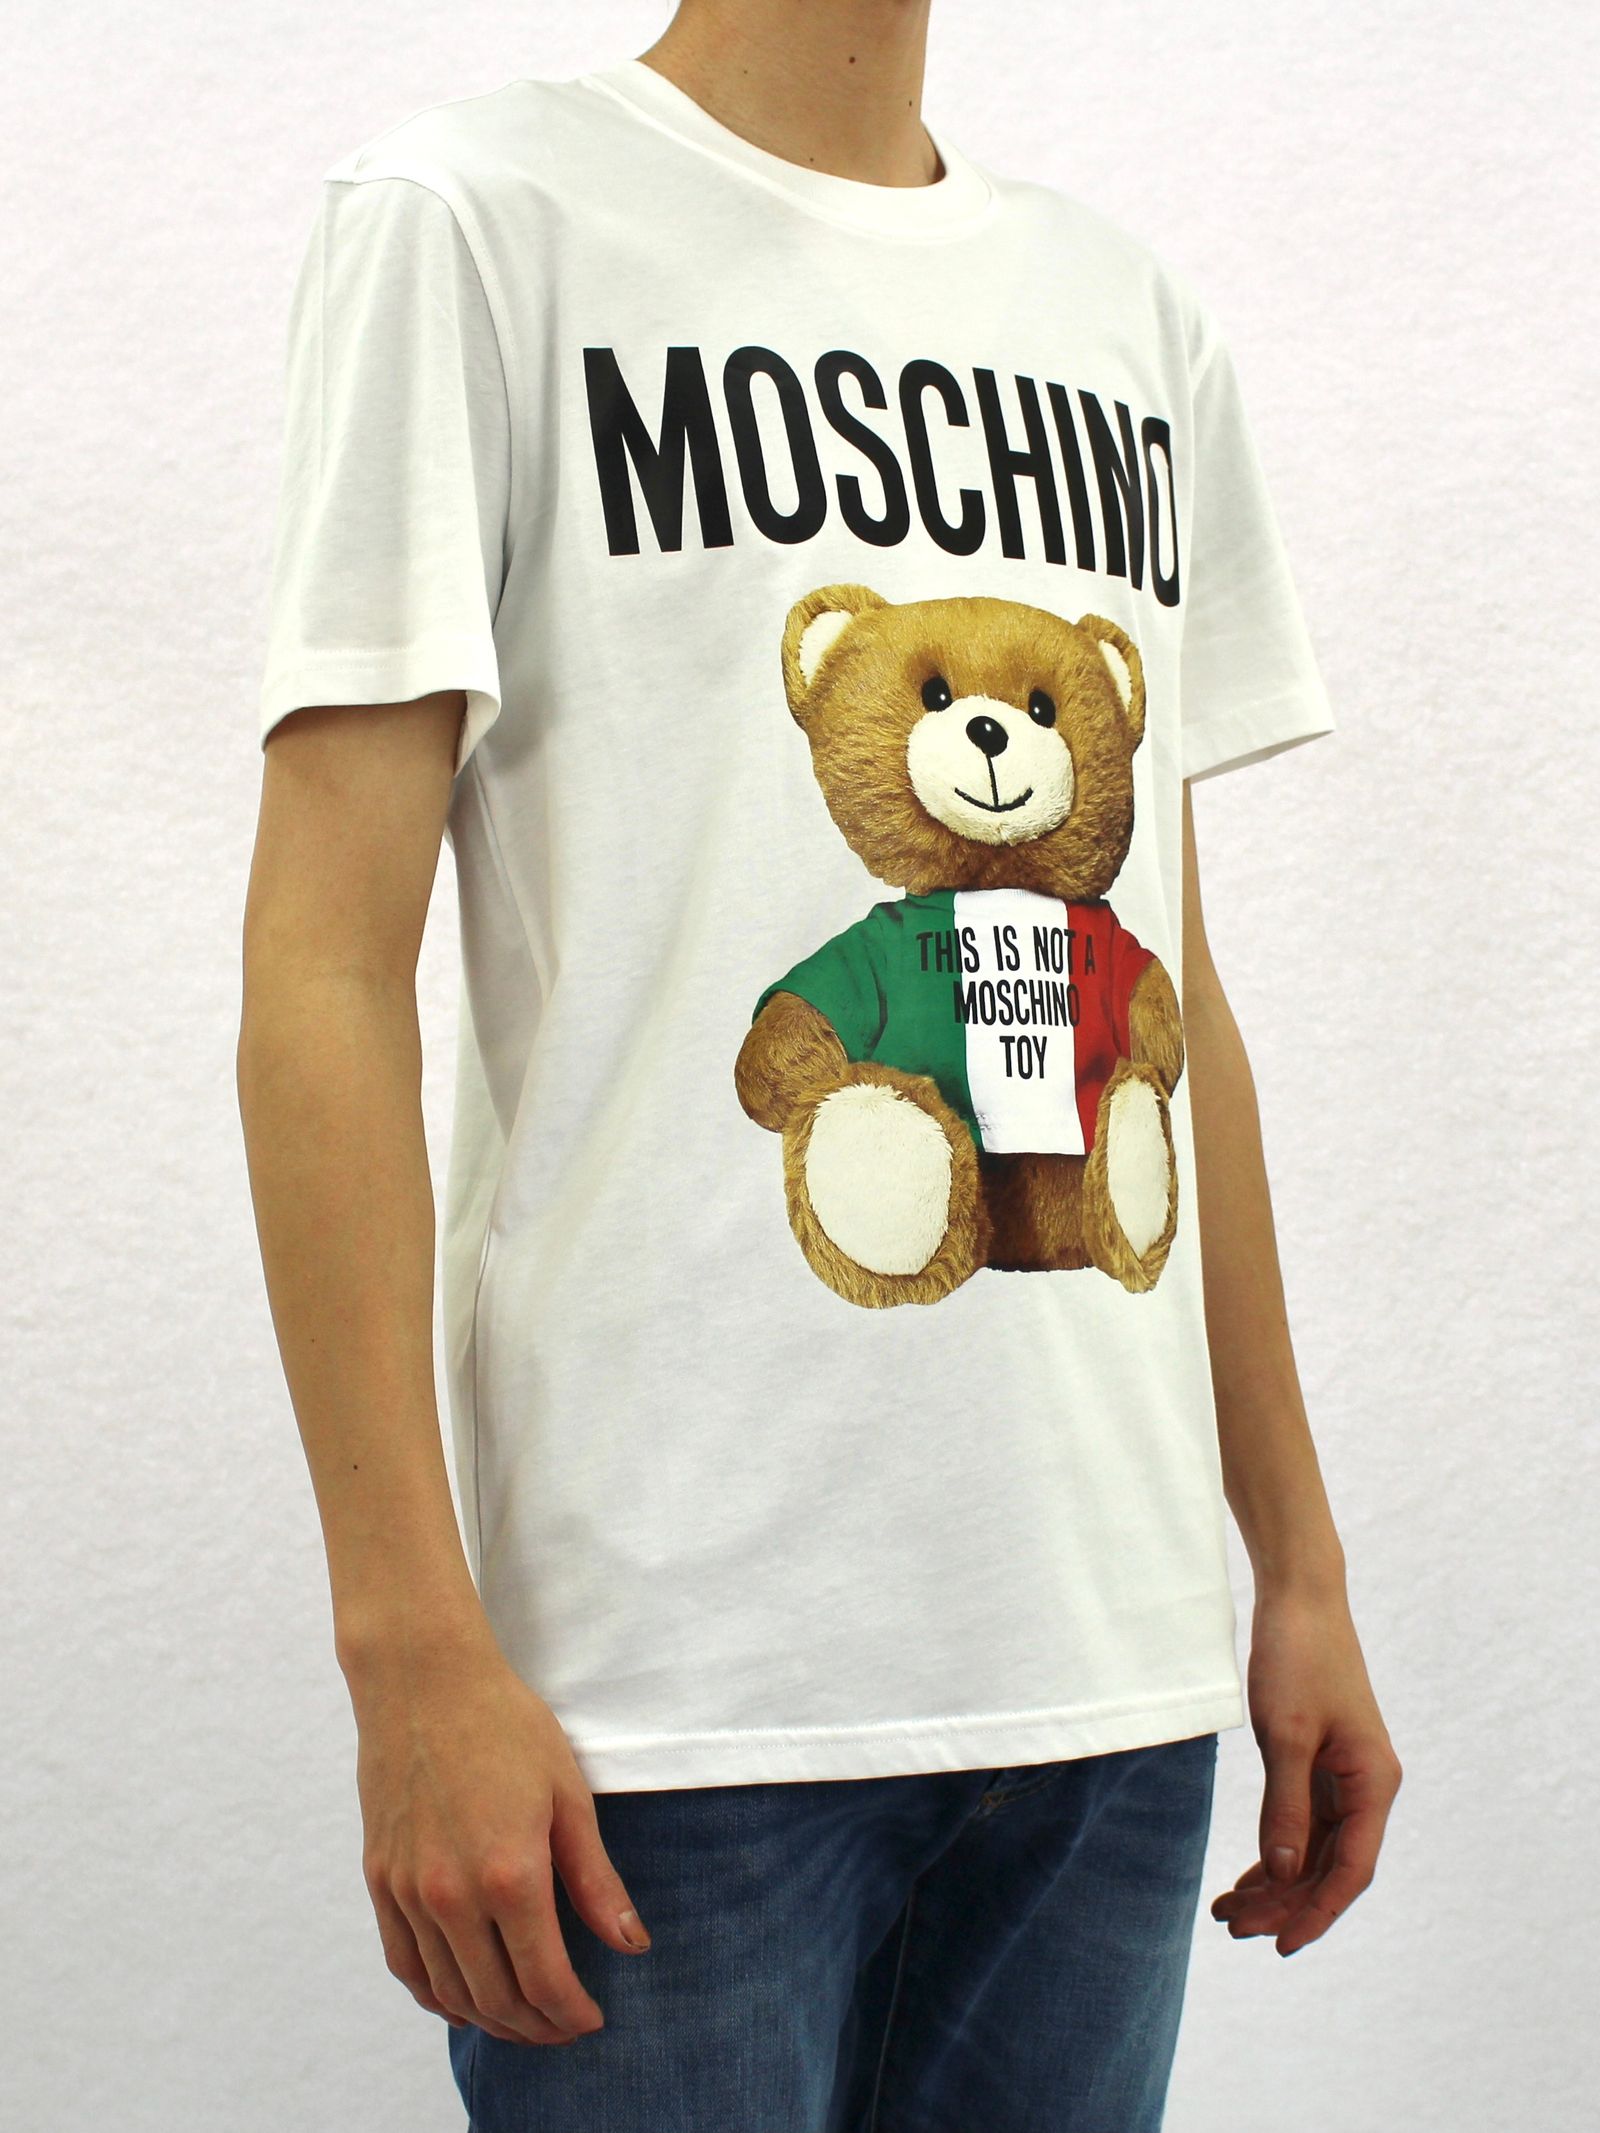 MOSCHINO - オーバーサイズ イタリアン ベアプリントTシャツ / OVER SIZED T-SHIRT ITALIAN TEDDY BEAR  / ホワイト × マルチ | STORY